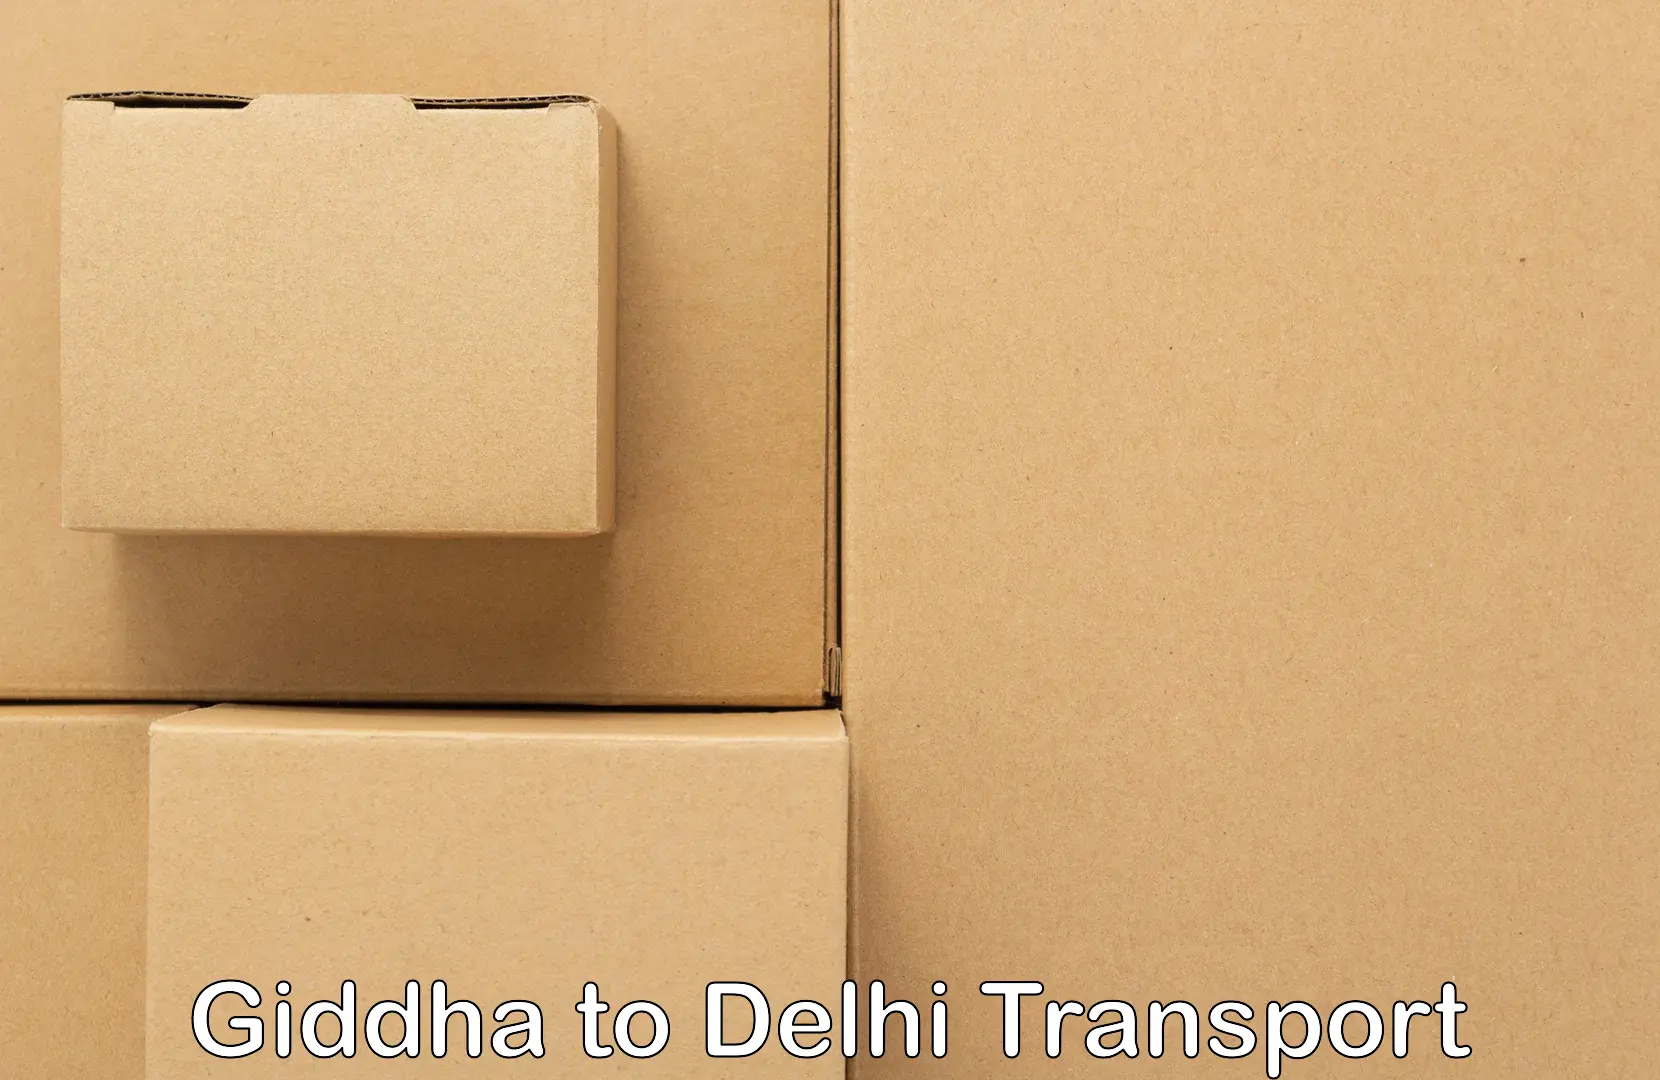 Shipping partner Giddha to East Delhi